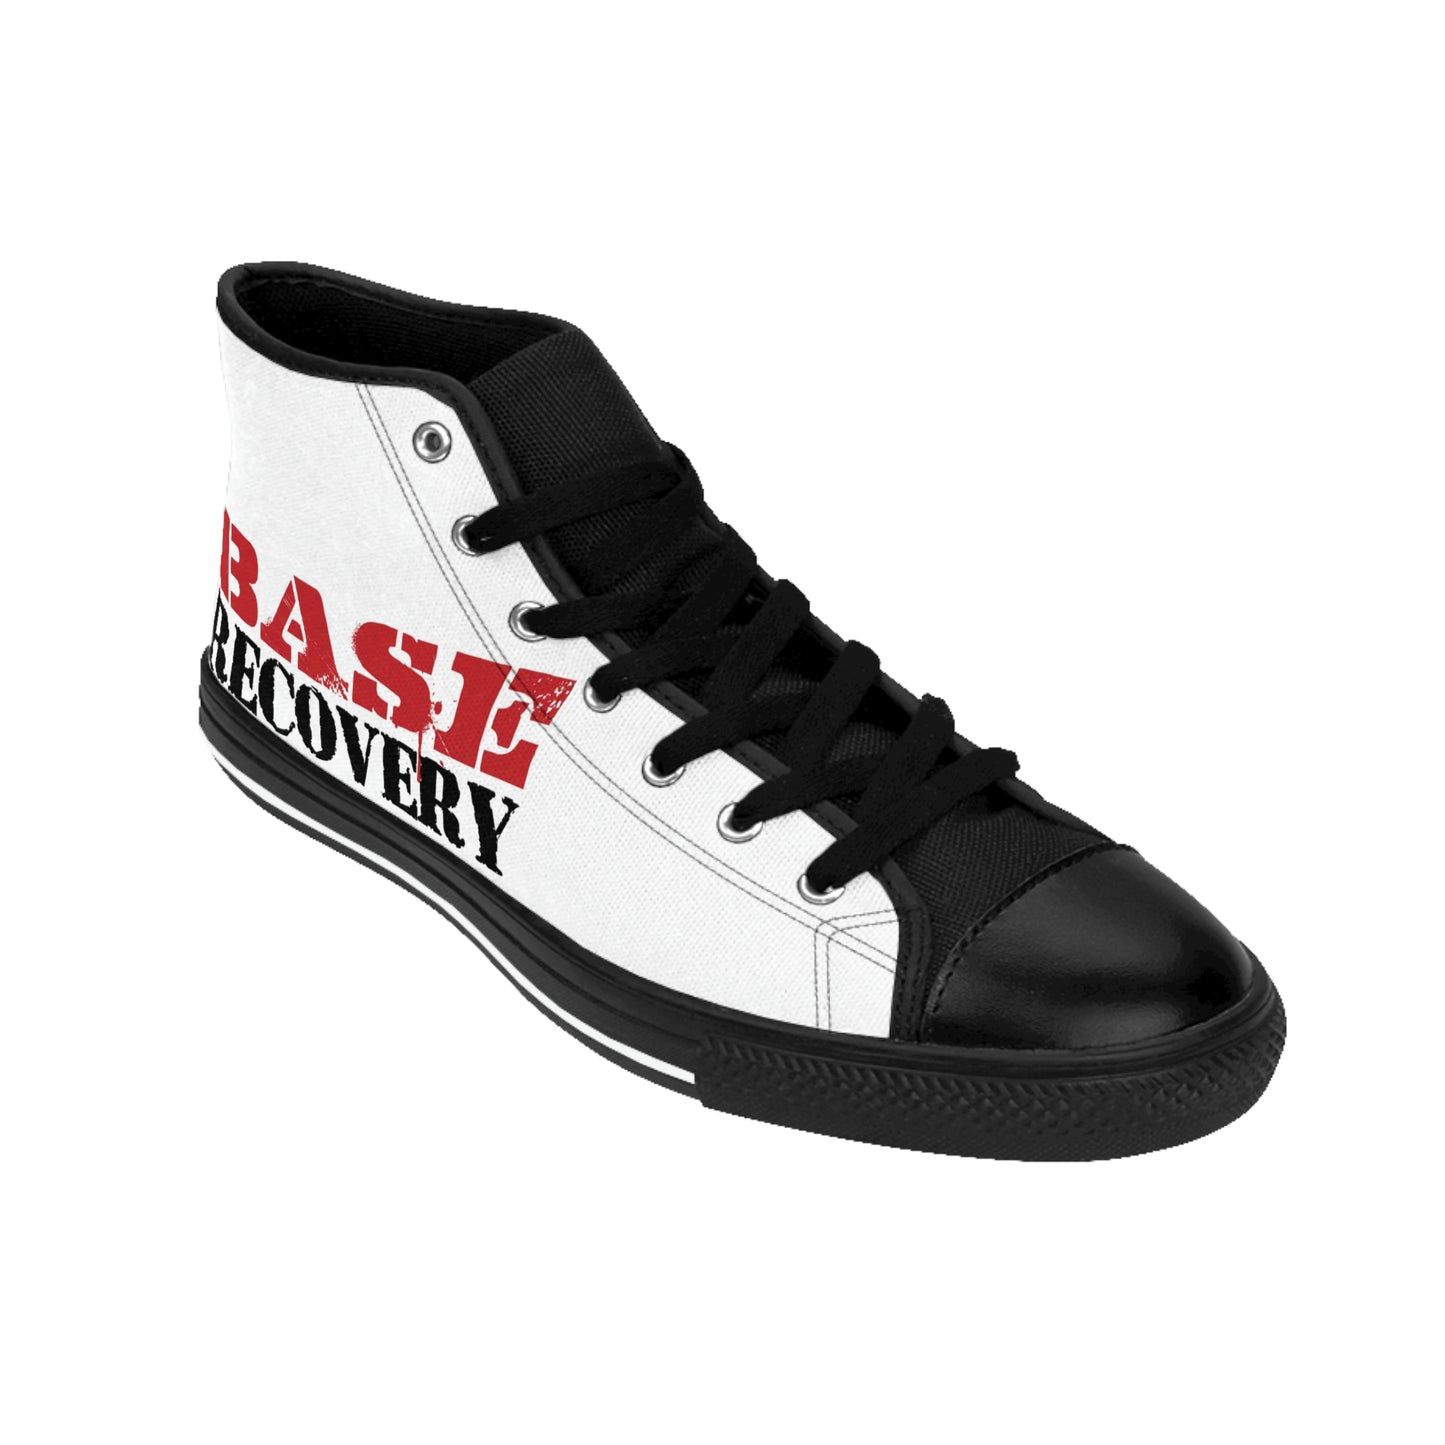 Base Men's Classic Sneakers